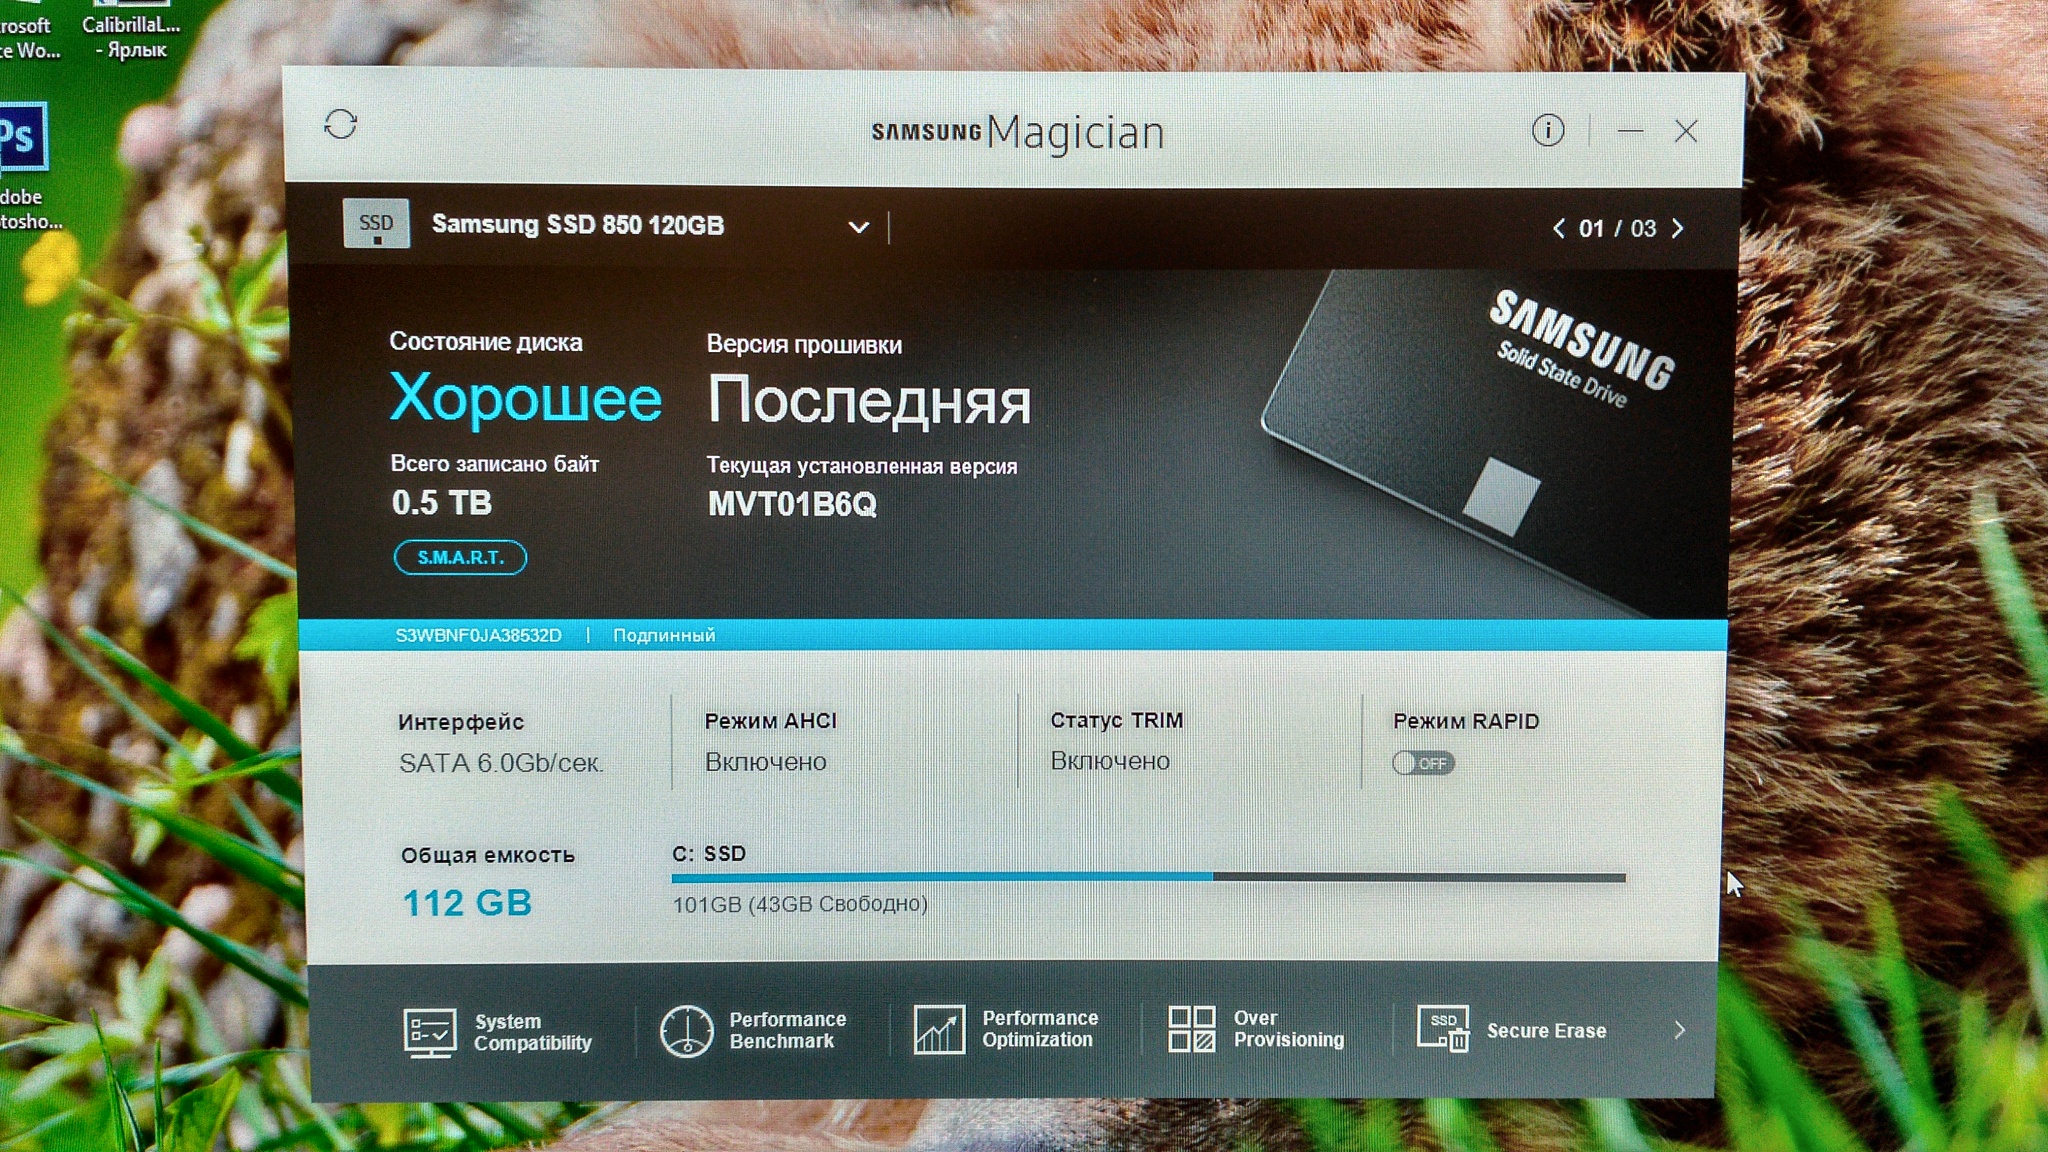 SSD Samsung MZ 7ln120bw. Samsung Magician SSD. SSD Samsung 850 120gb обзор. Samsung SSD Firmware. Не вижу ssd samsung